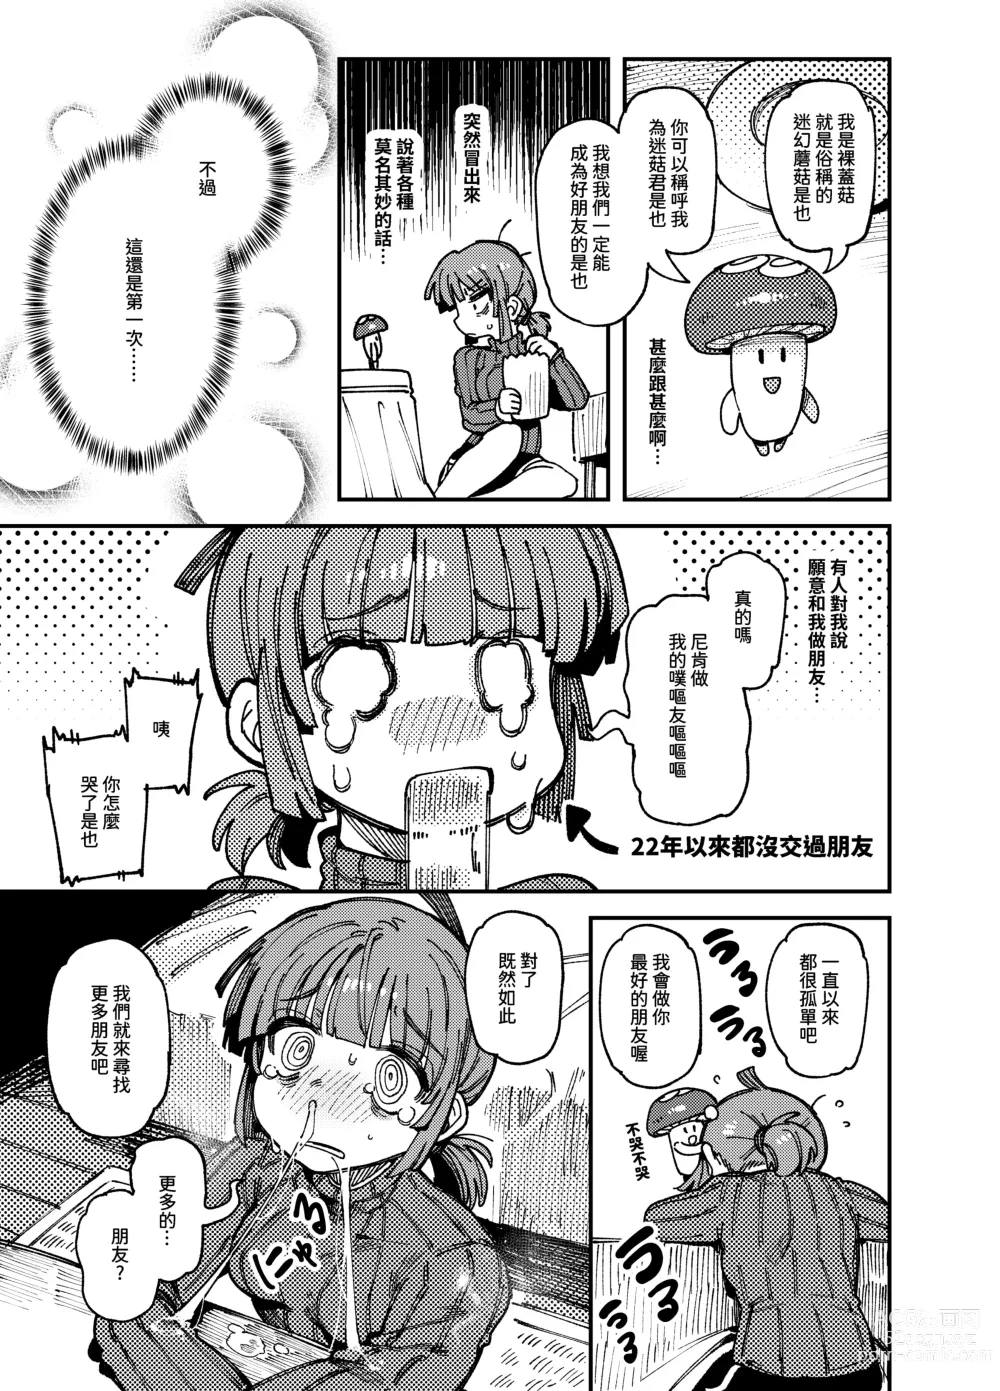 Page 6 of doujinshi 家裡過於潮濕長出致幻蘑菇意外誤食後發情的那些事